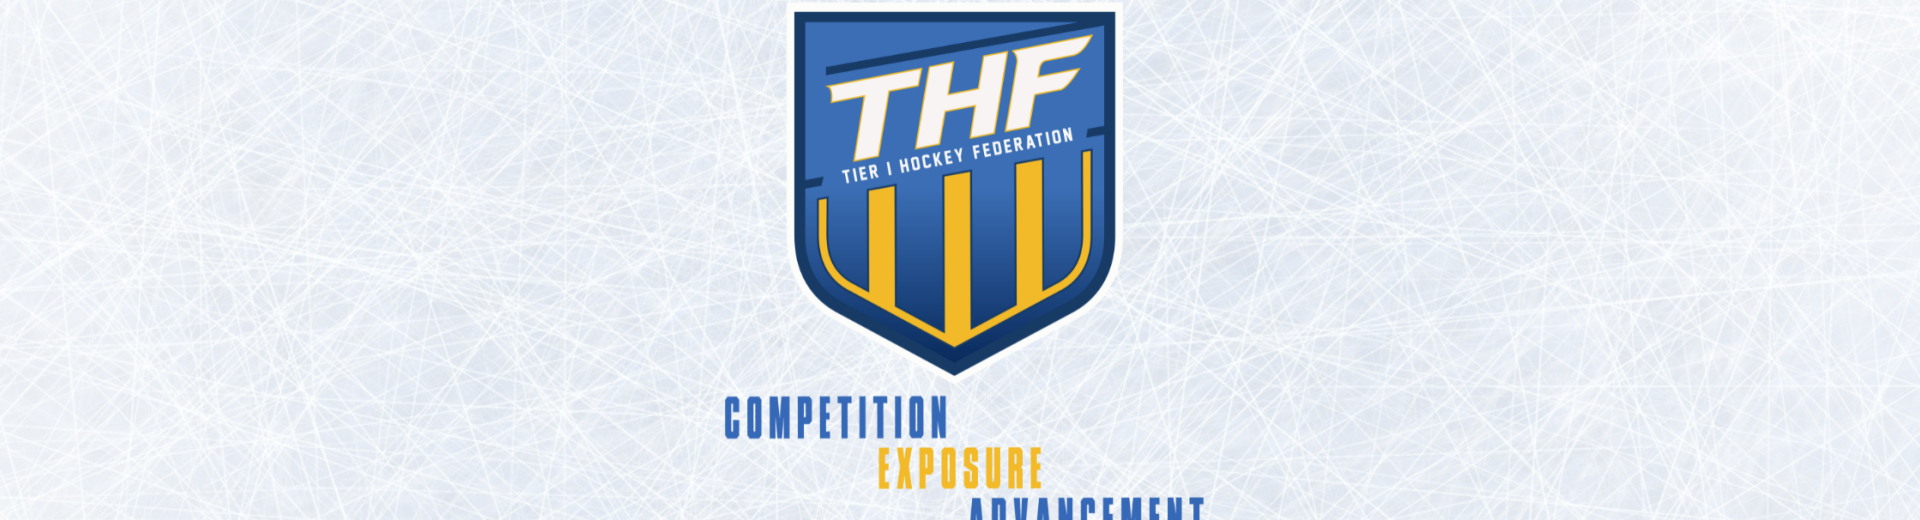 Tier 1 Hockey Federation Banner